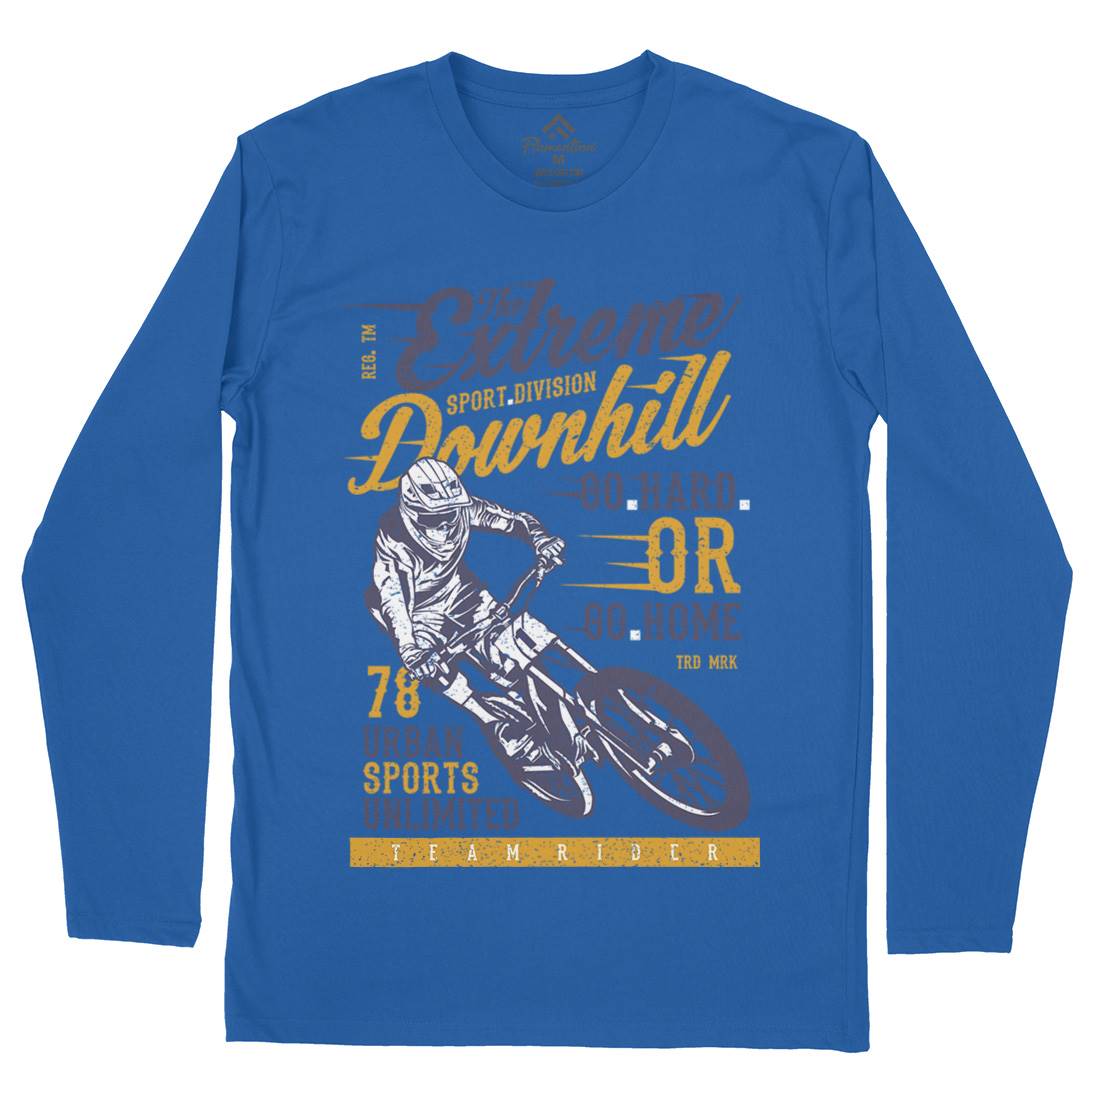 Extreme Downhill Mens Long Sleeve T-Shirt Bikes A772